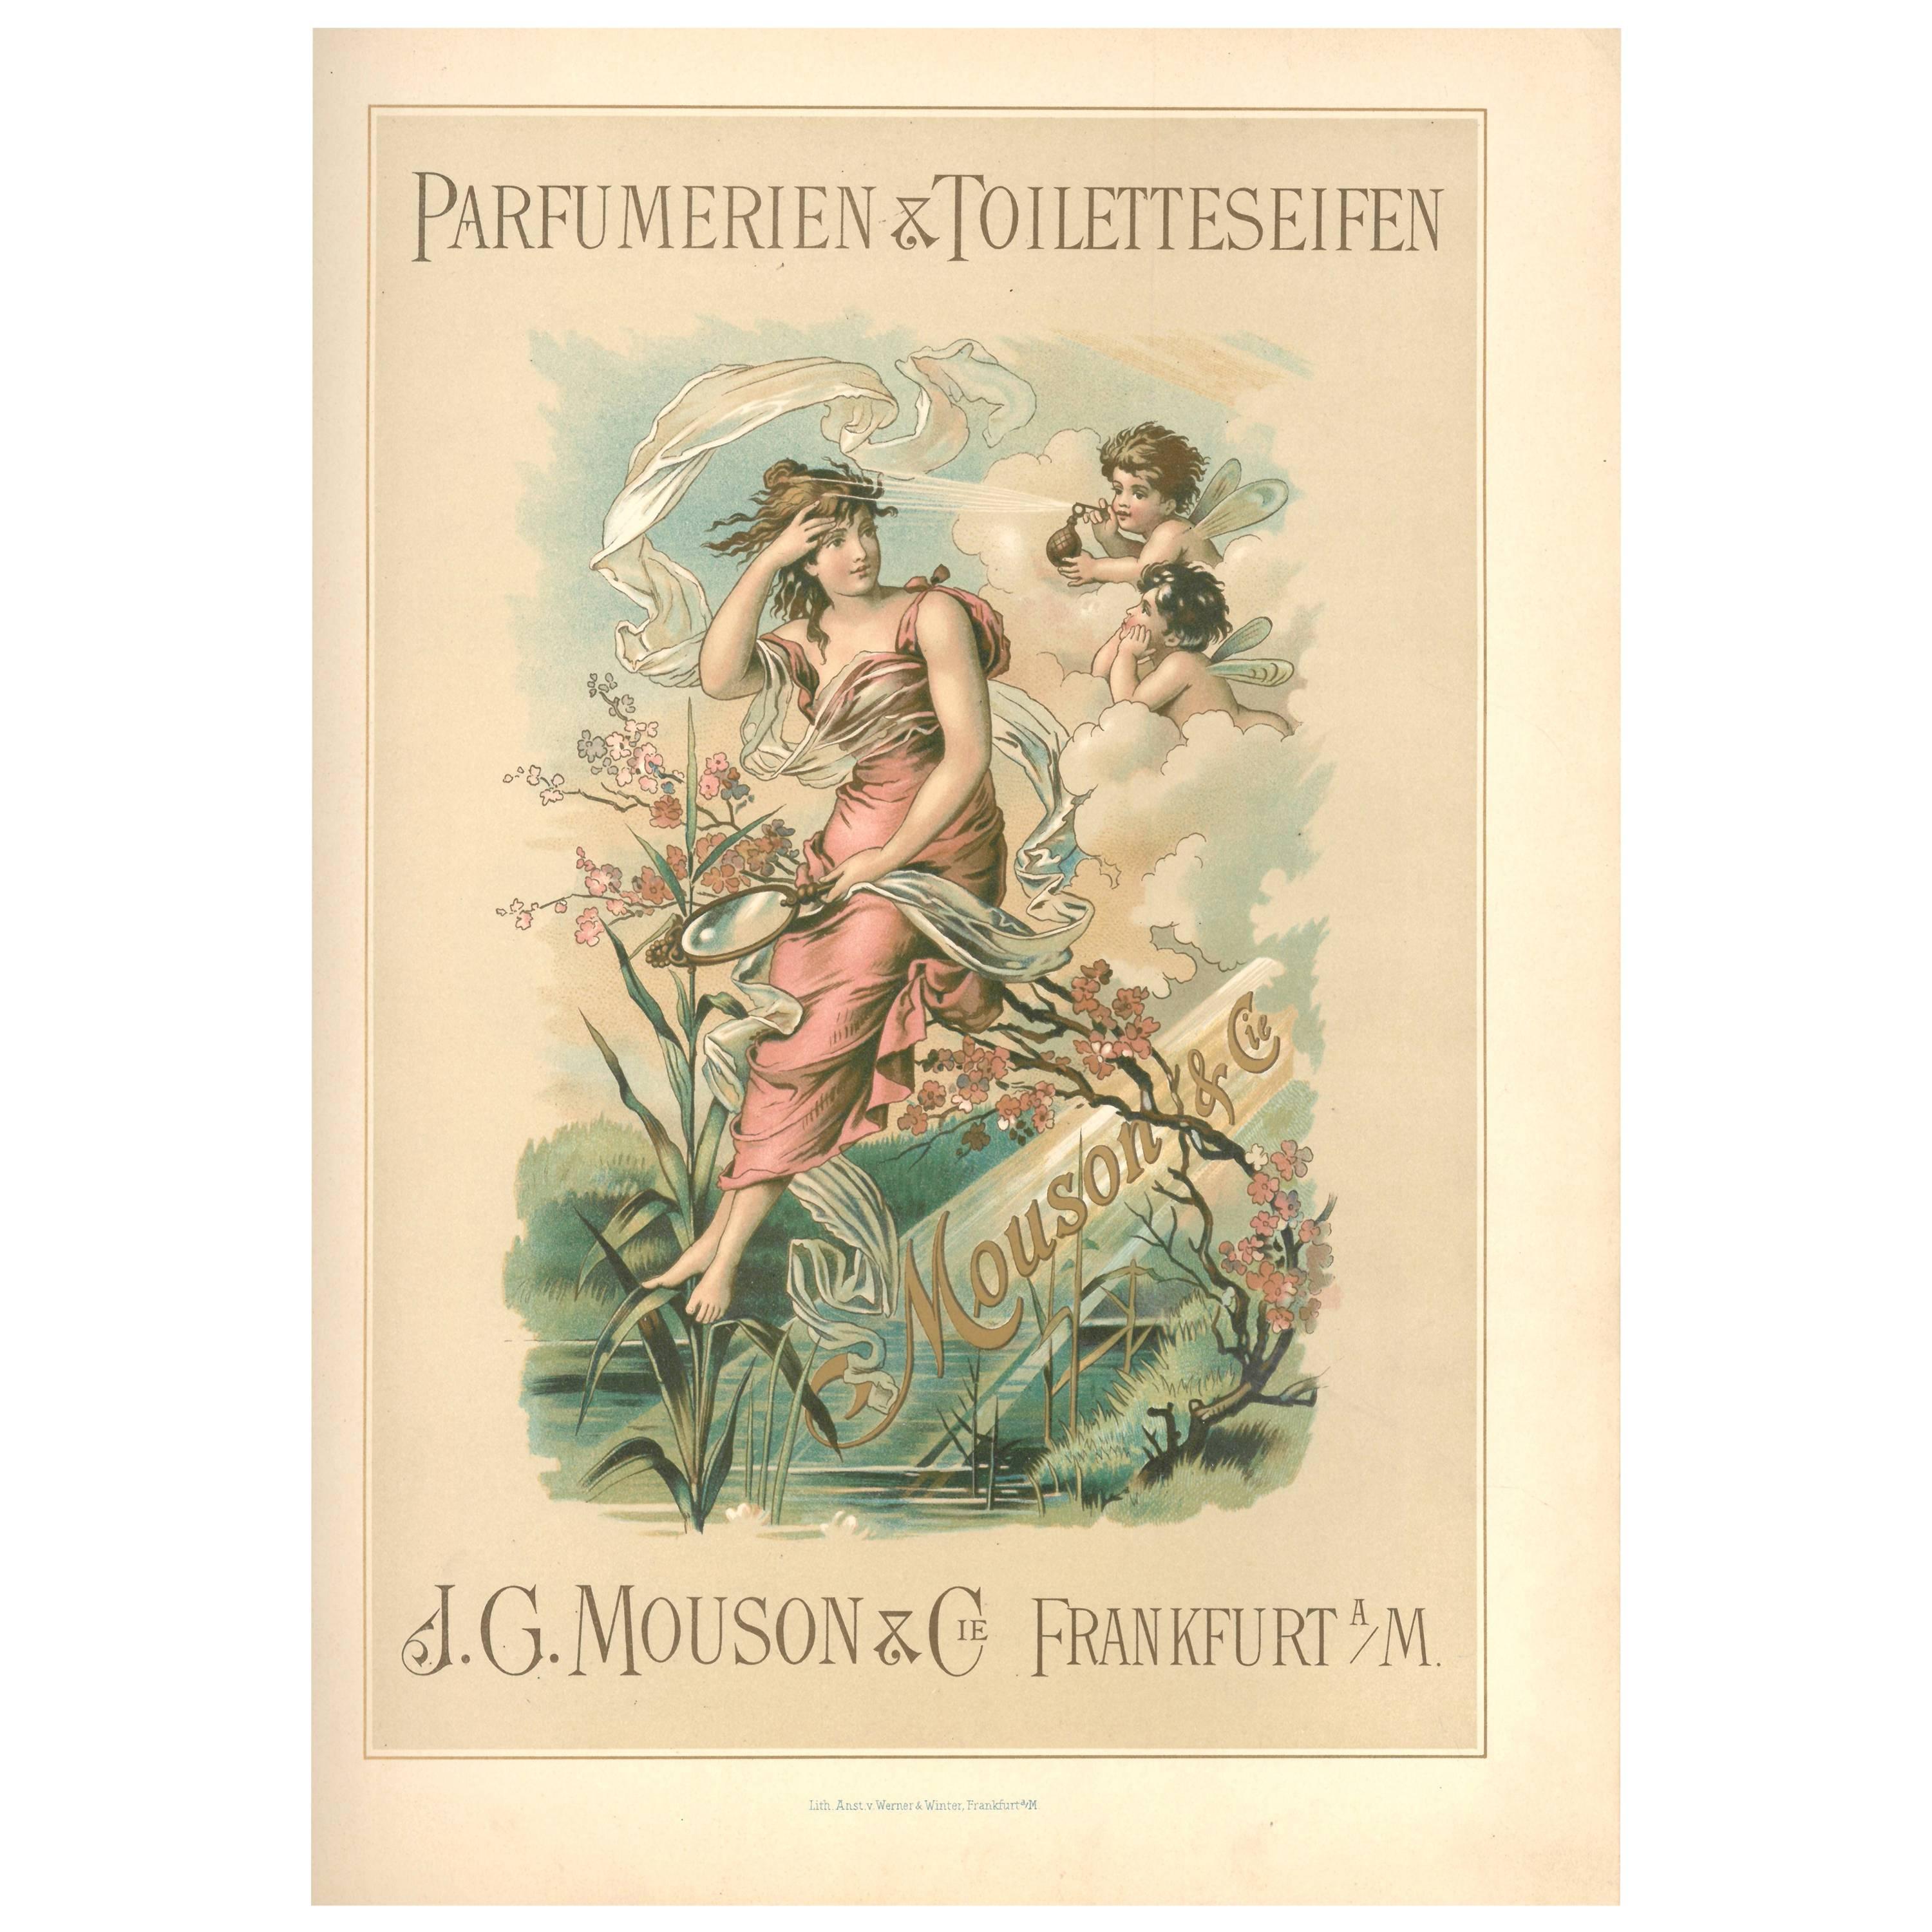 Parfumerien & Toiletteseifen Mouson & Co. Frankfurt (Book)